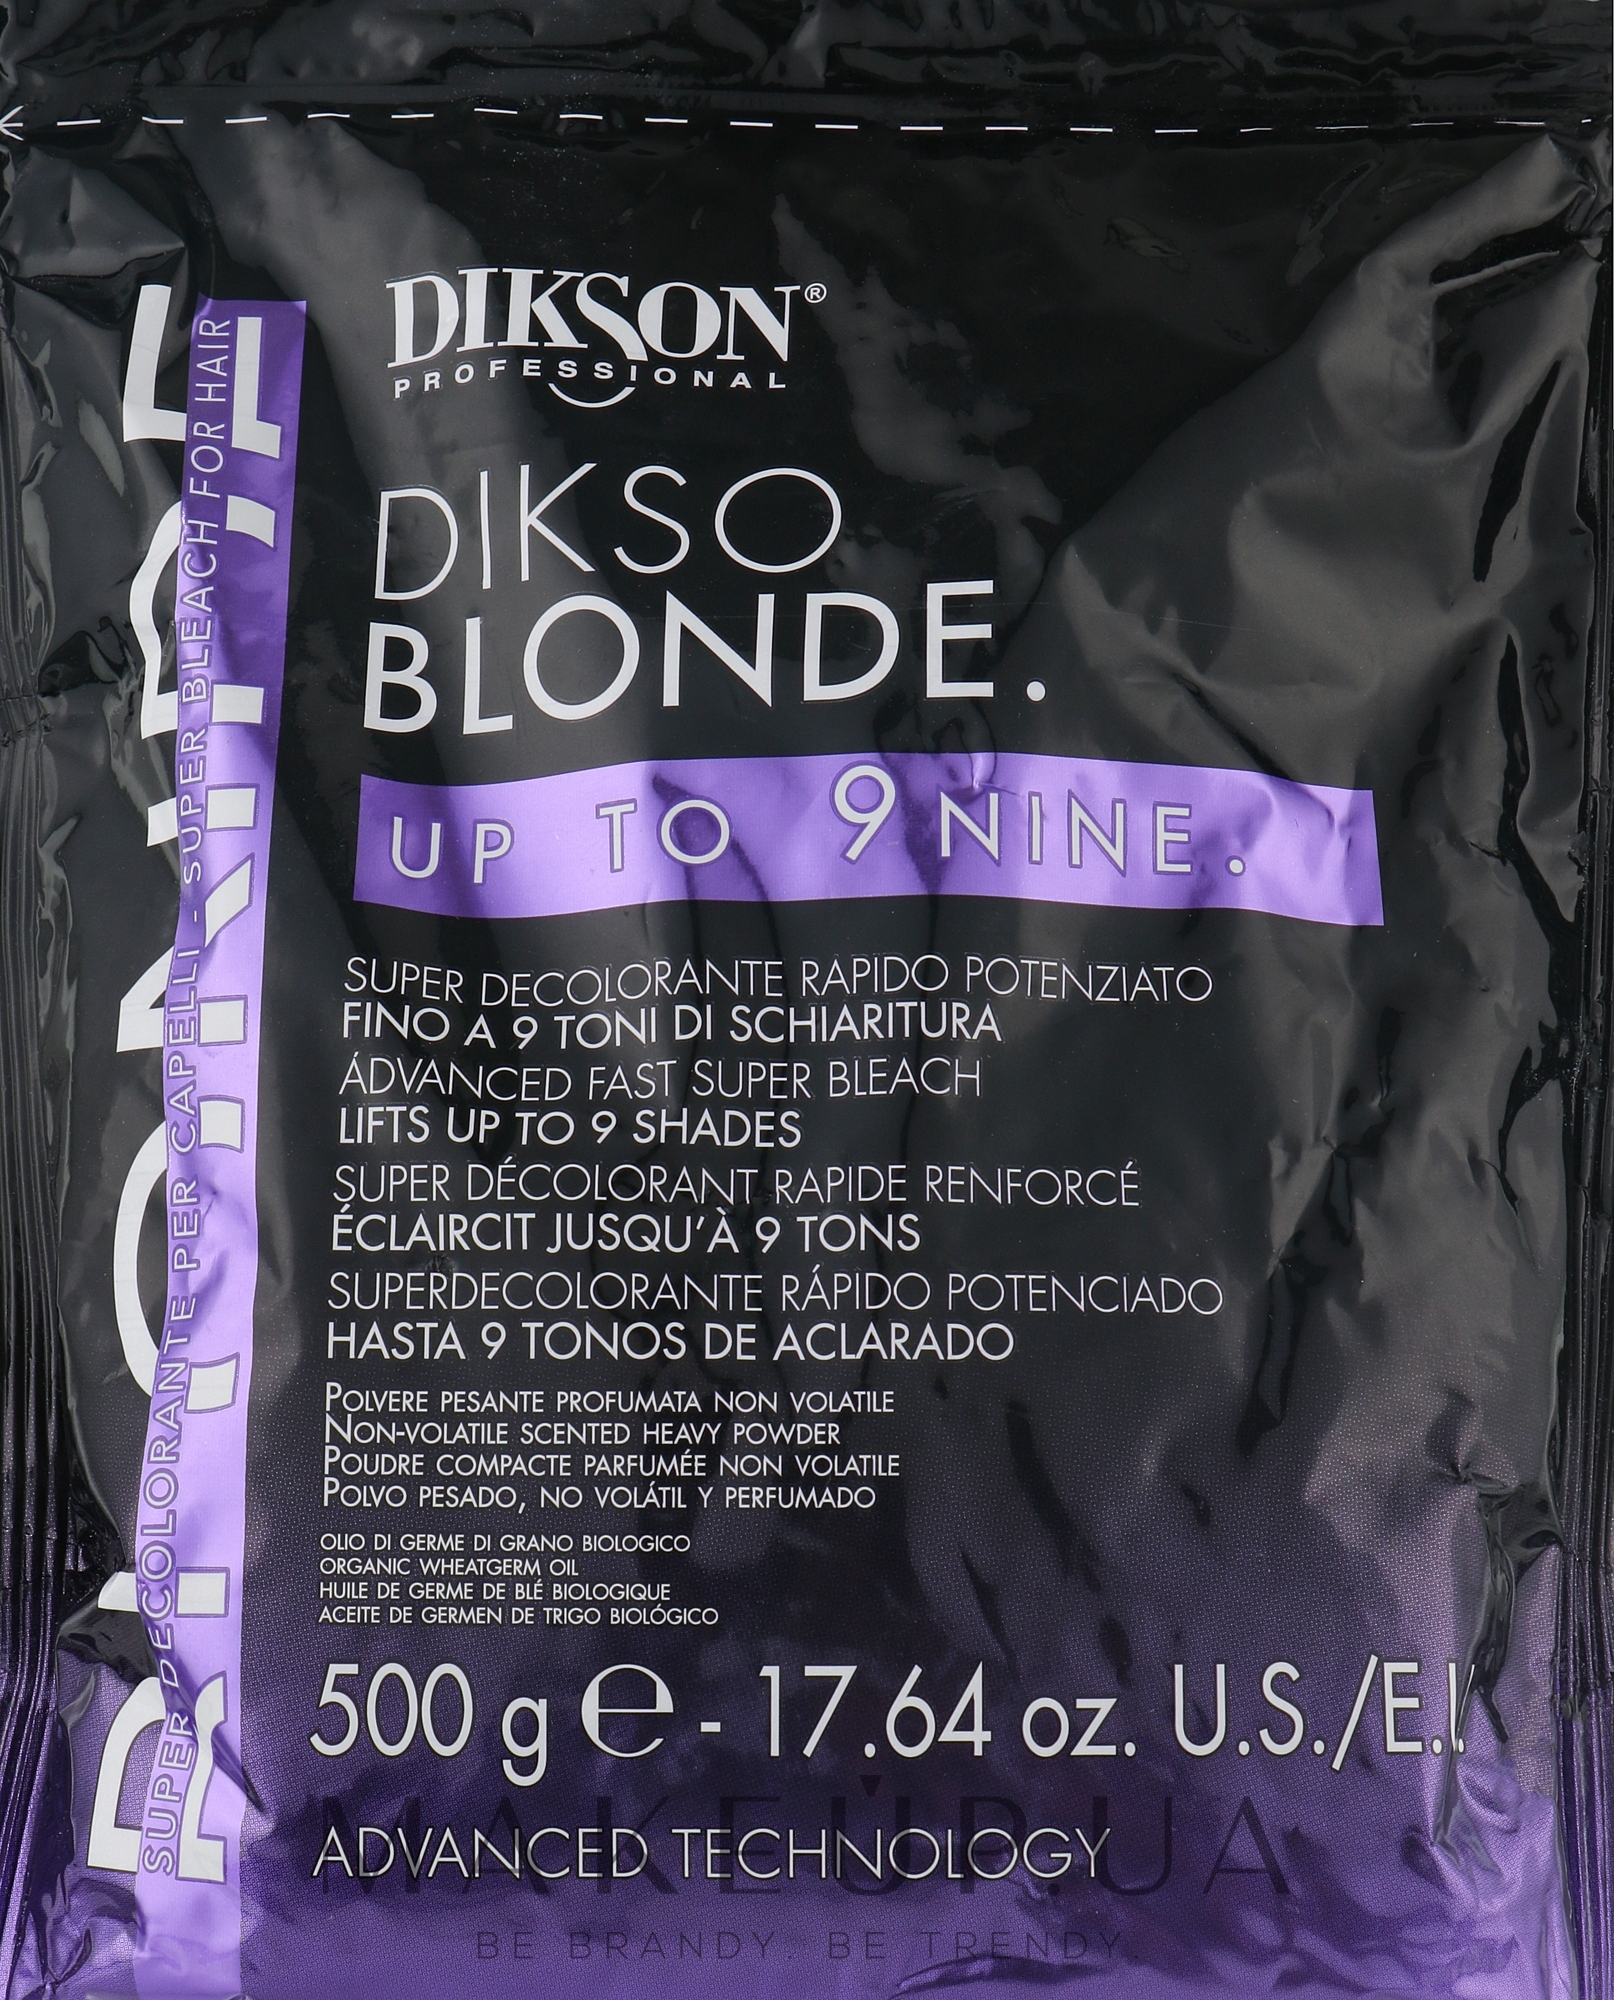 Усиленный осветляющий порошок для волос - Dikson Dikso Blonde Bleaching Powder Up To 9 (зип-пакет) — фото 500g